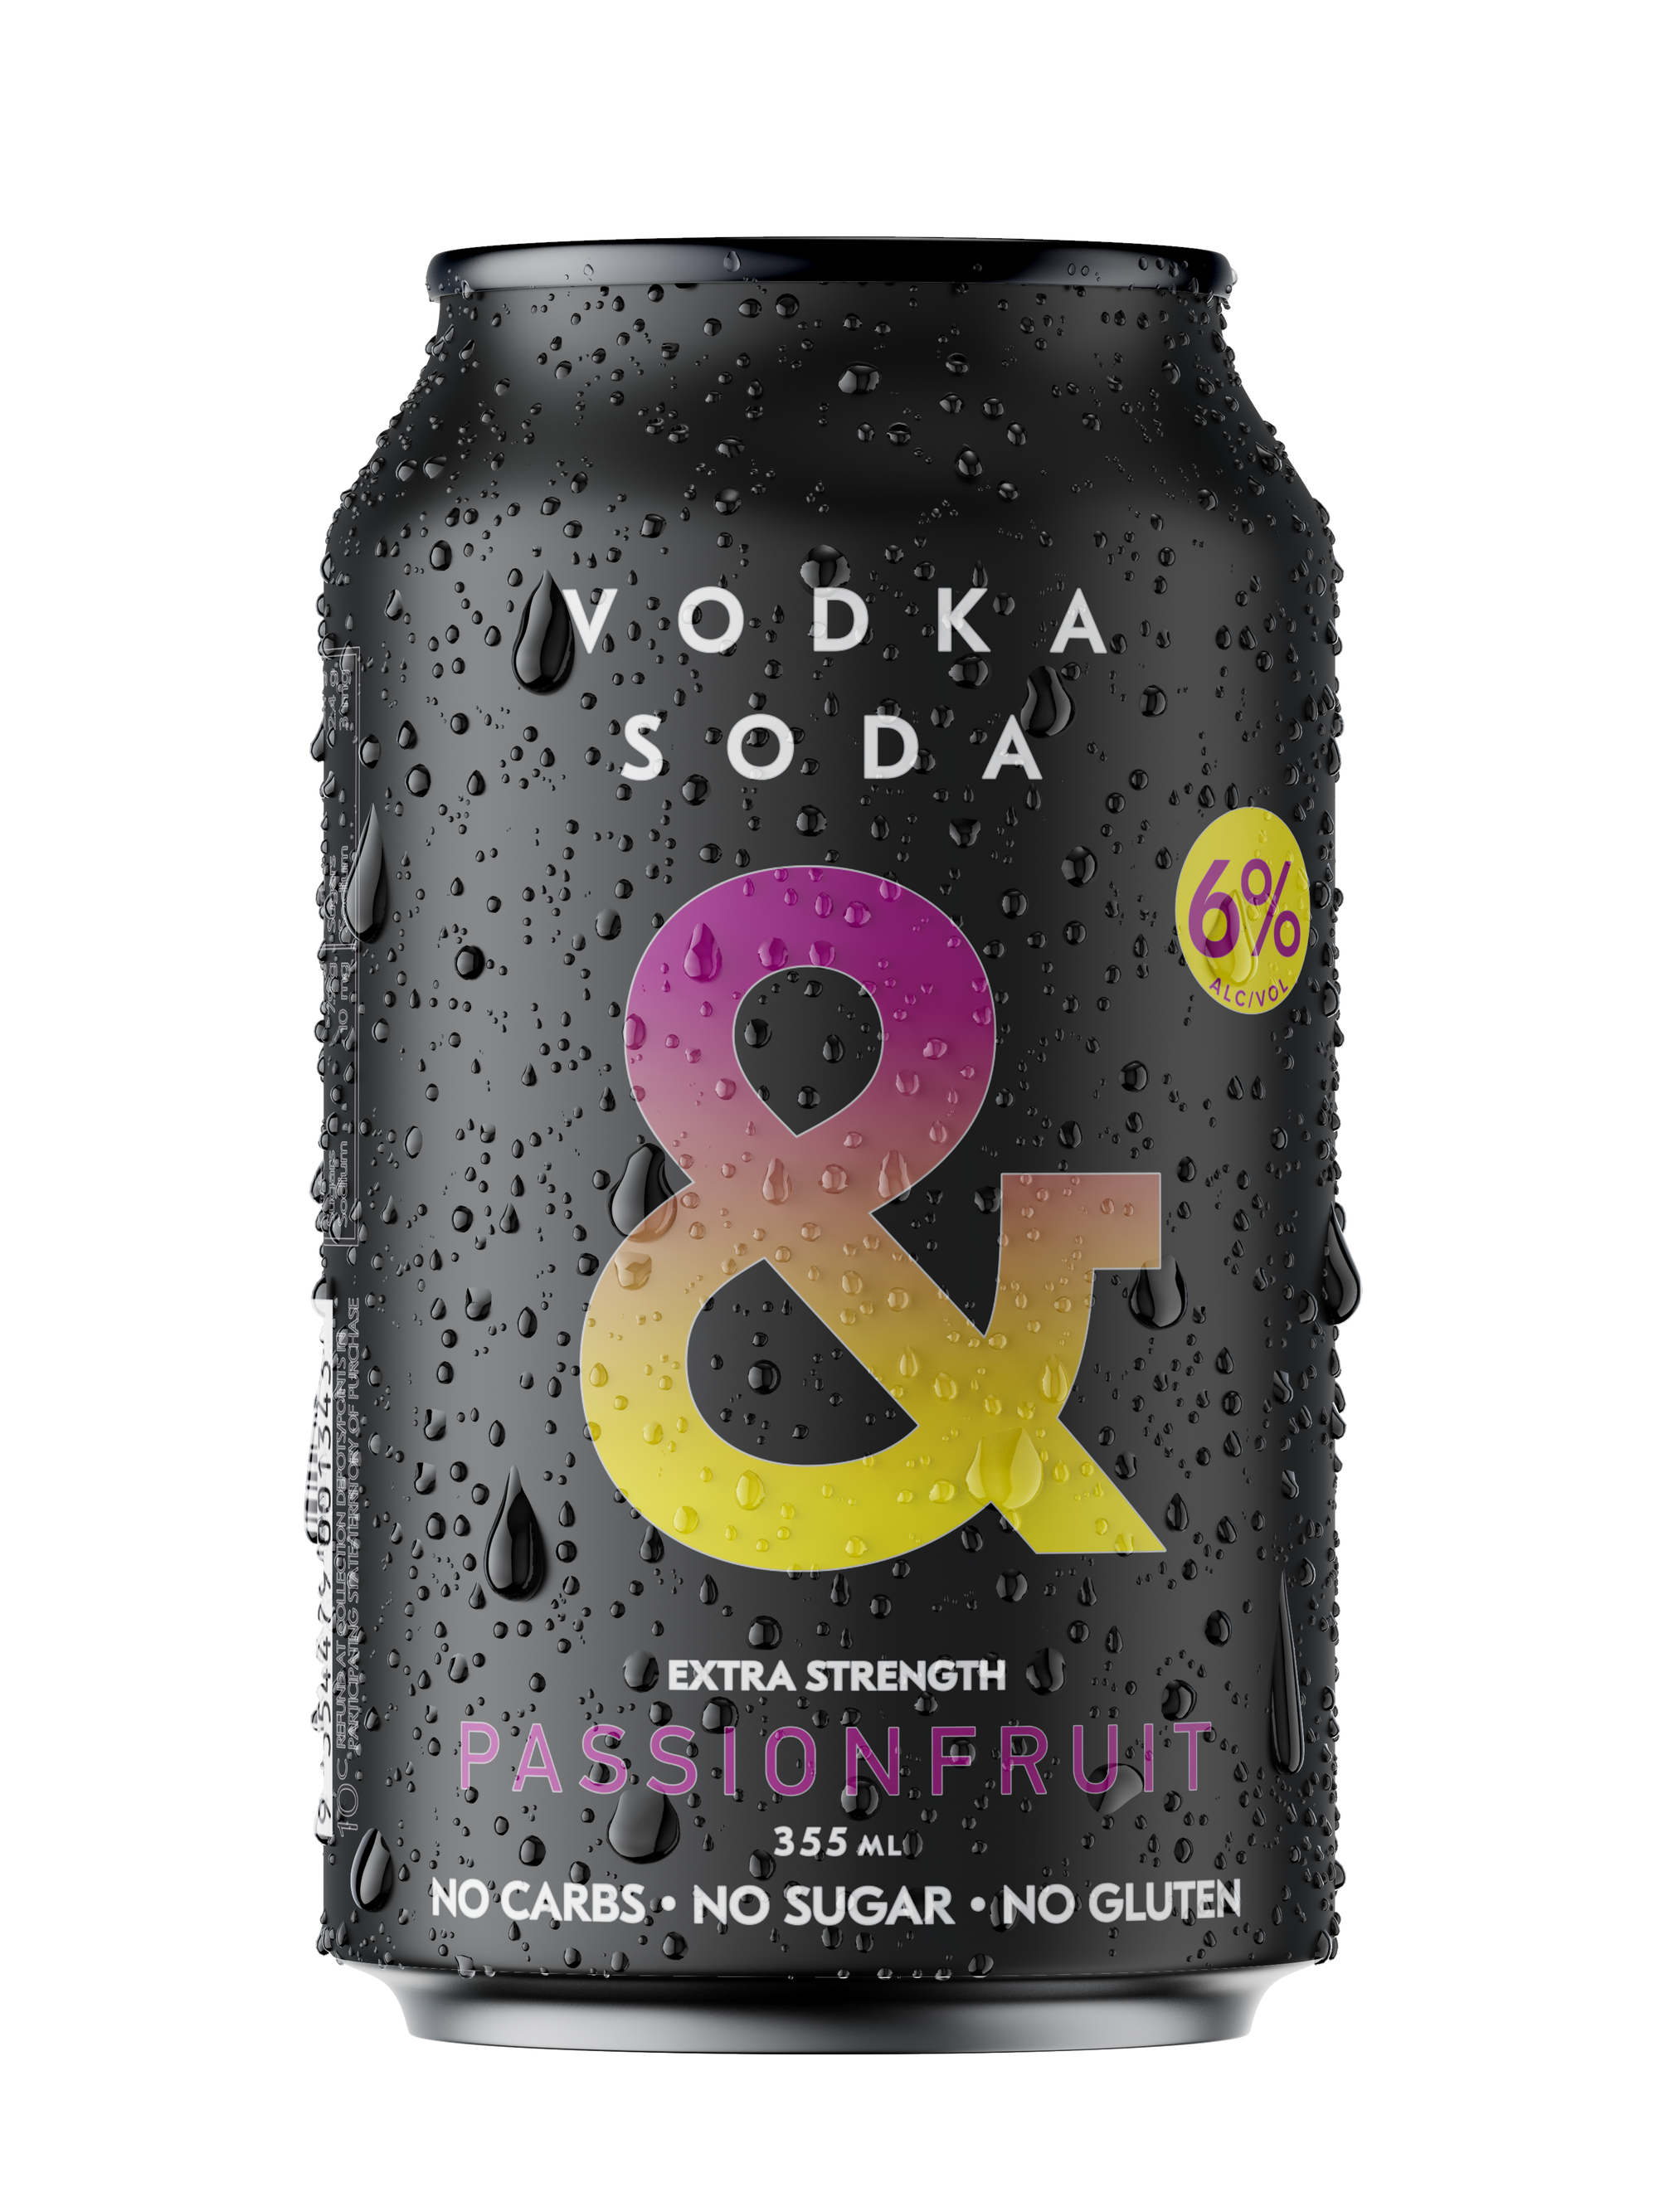 Vodka Soda BL&CK – Passionfruit Cans (16 Pack)